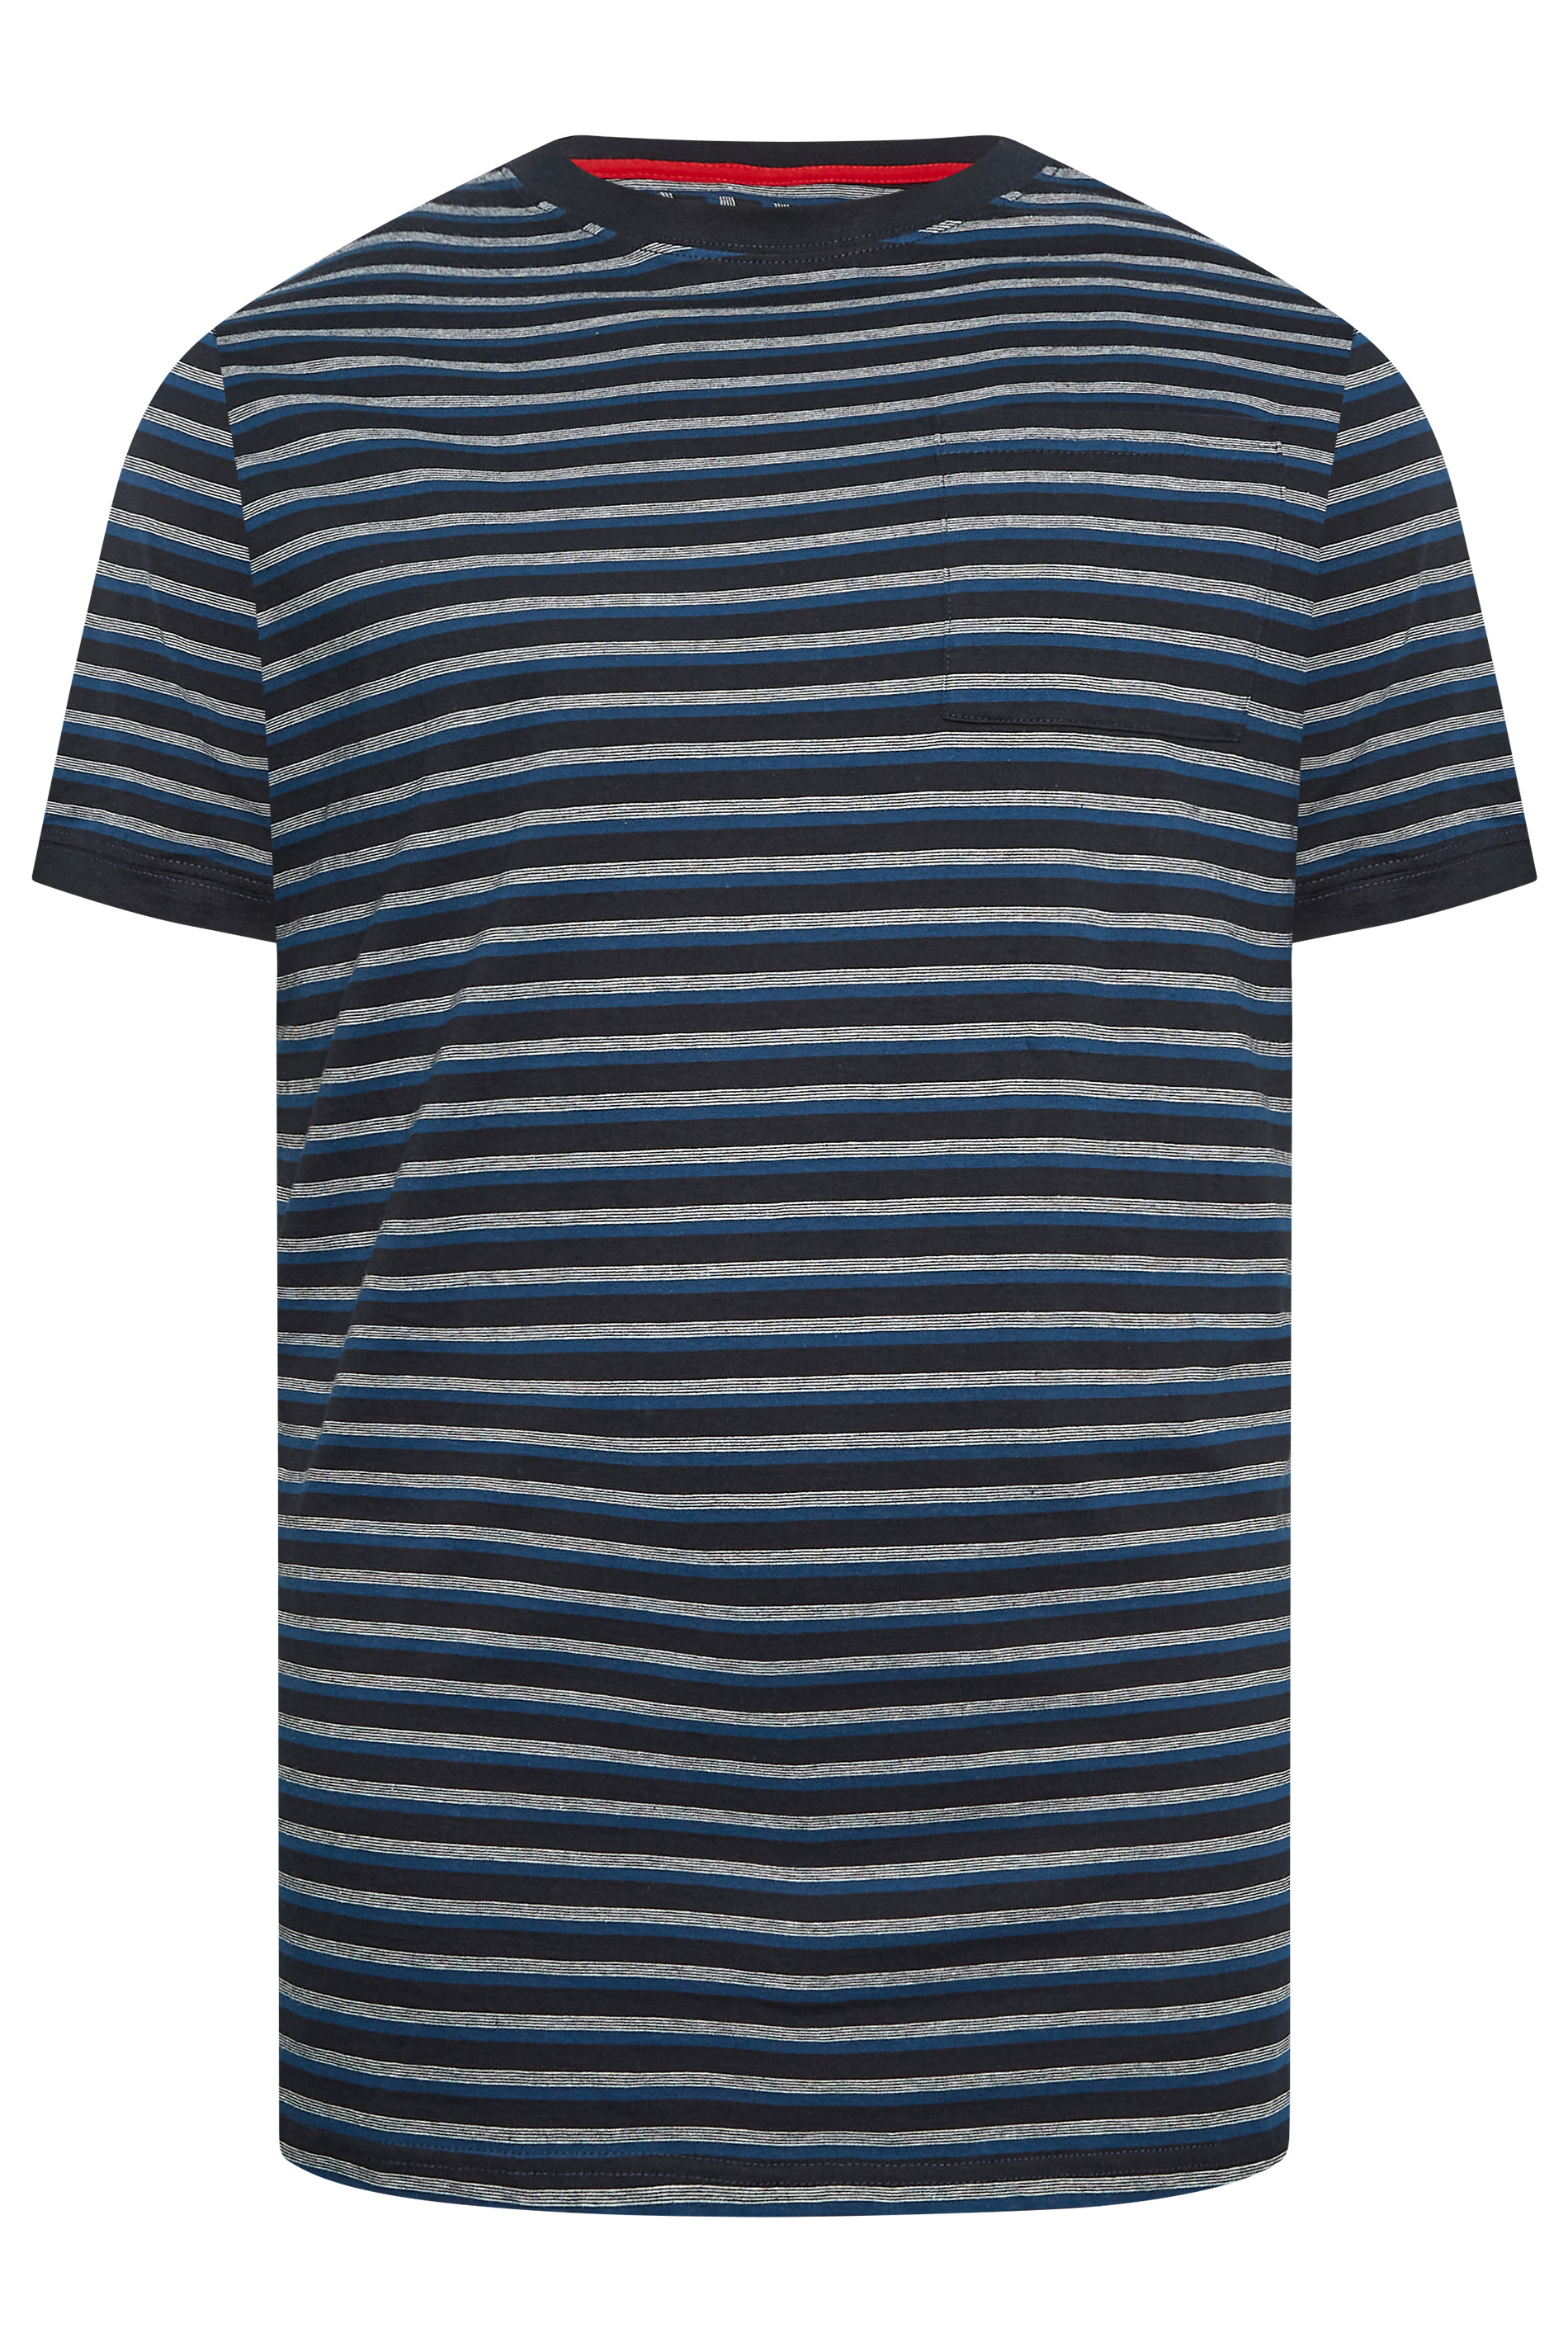 D555 Big & Tall Navy Blue & Grey Stripe T-Shirt | BadRhino 3